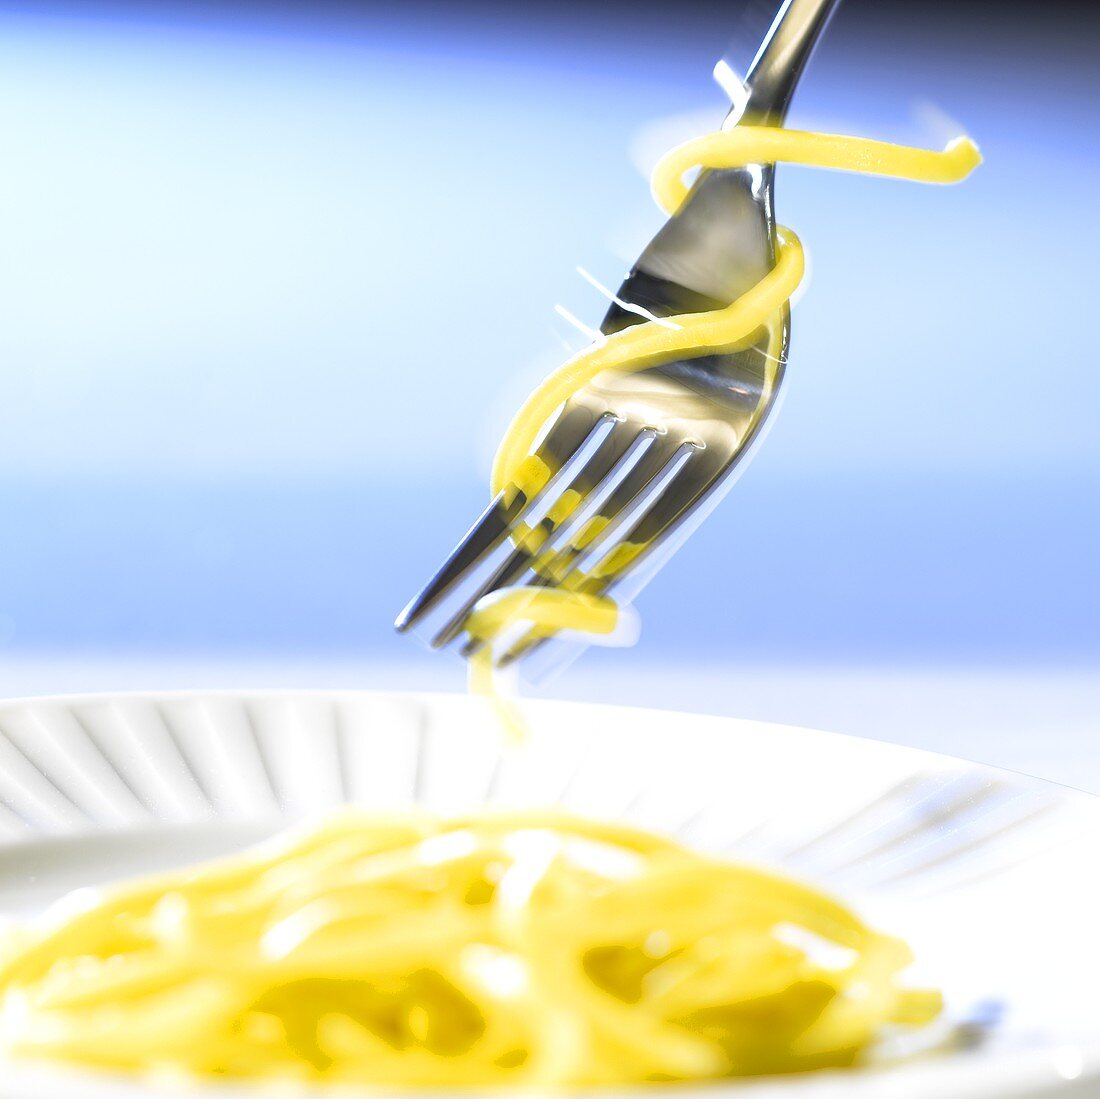 Spaghetti rolled around a fork